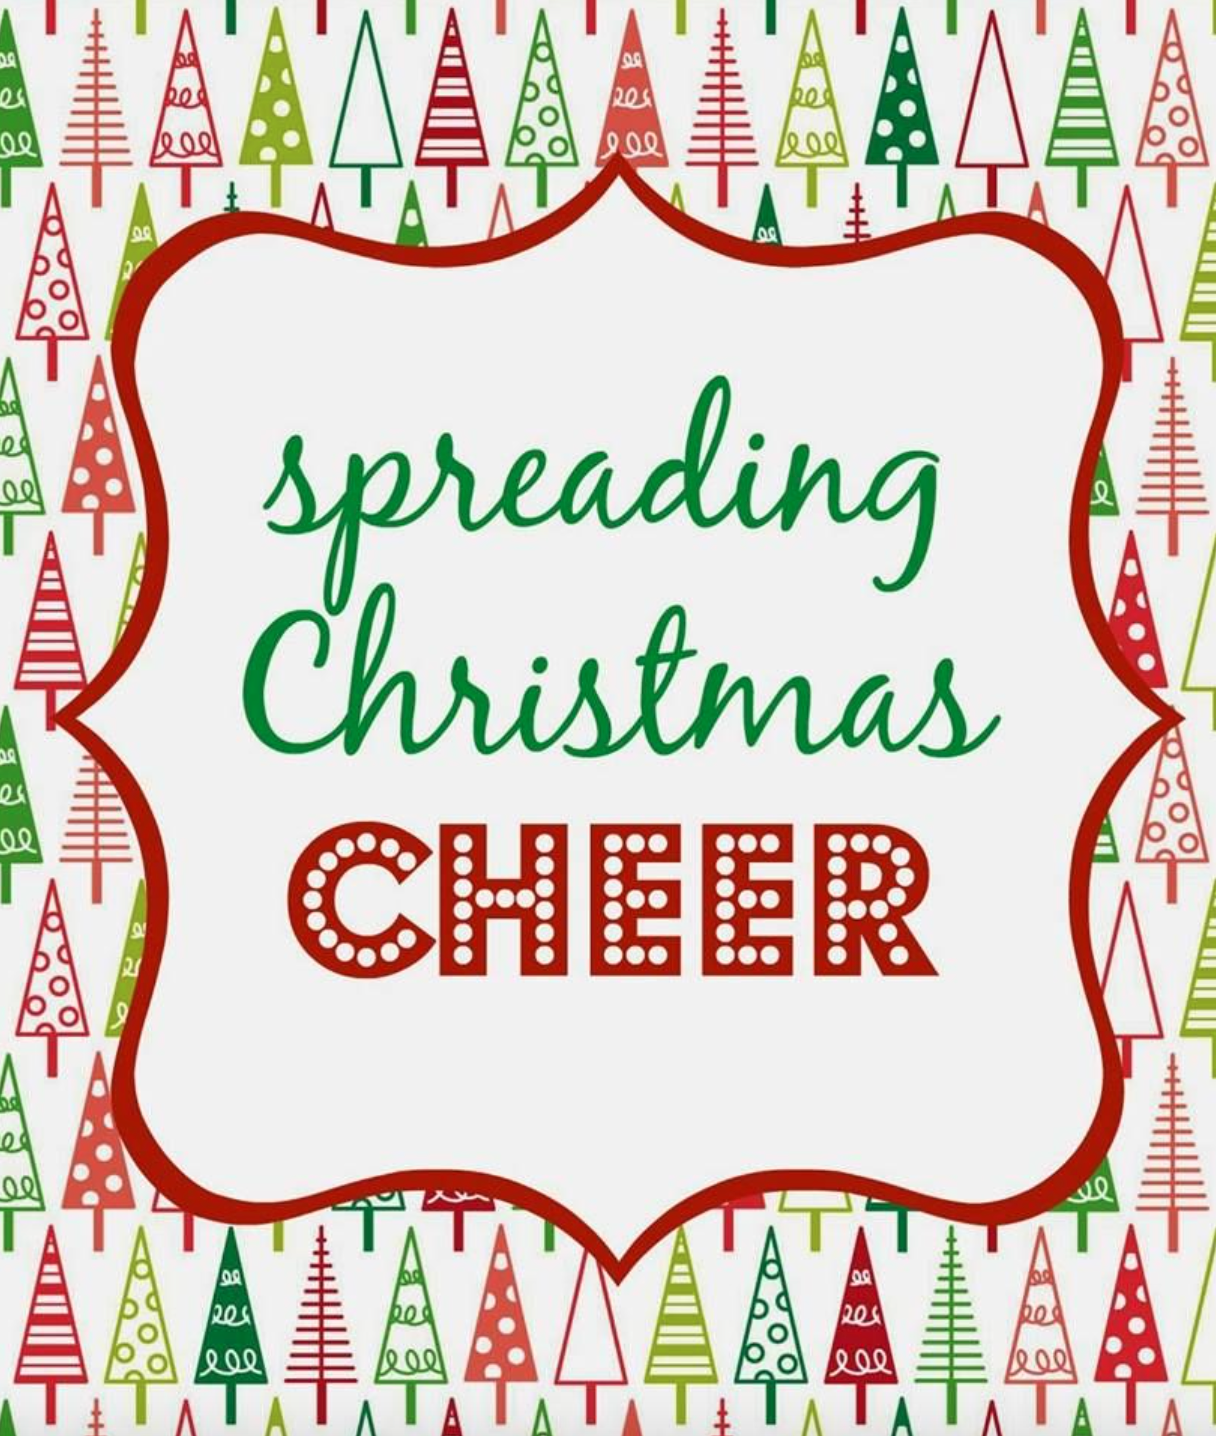 Spreading Christmas Cheer